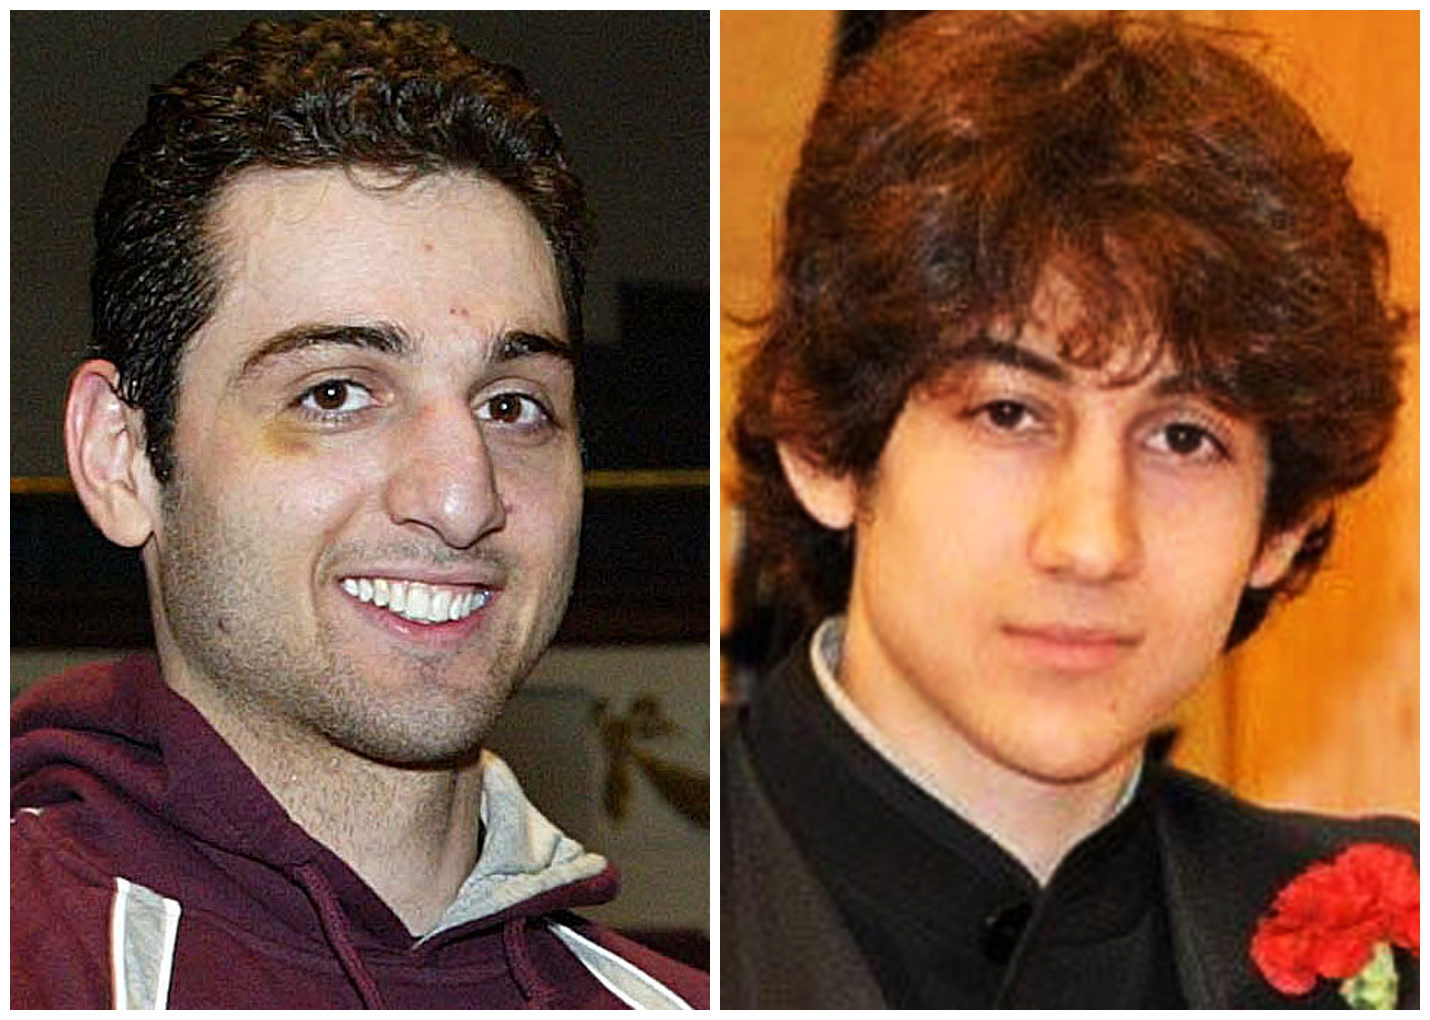 Boton Marathon bombing suspects Tamerlan, left, and Dzhokhar Tsarnaev